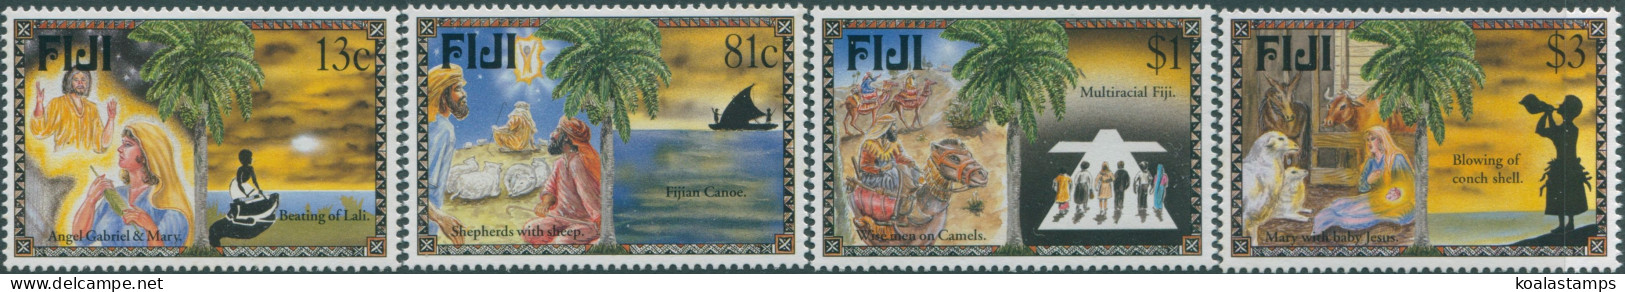 Fiji 1996 SG971-974 Christmas Set MNH - Fiji (1970-...)